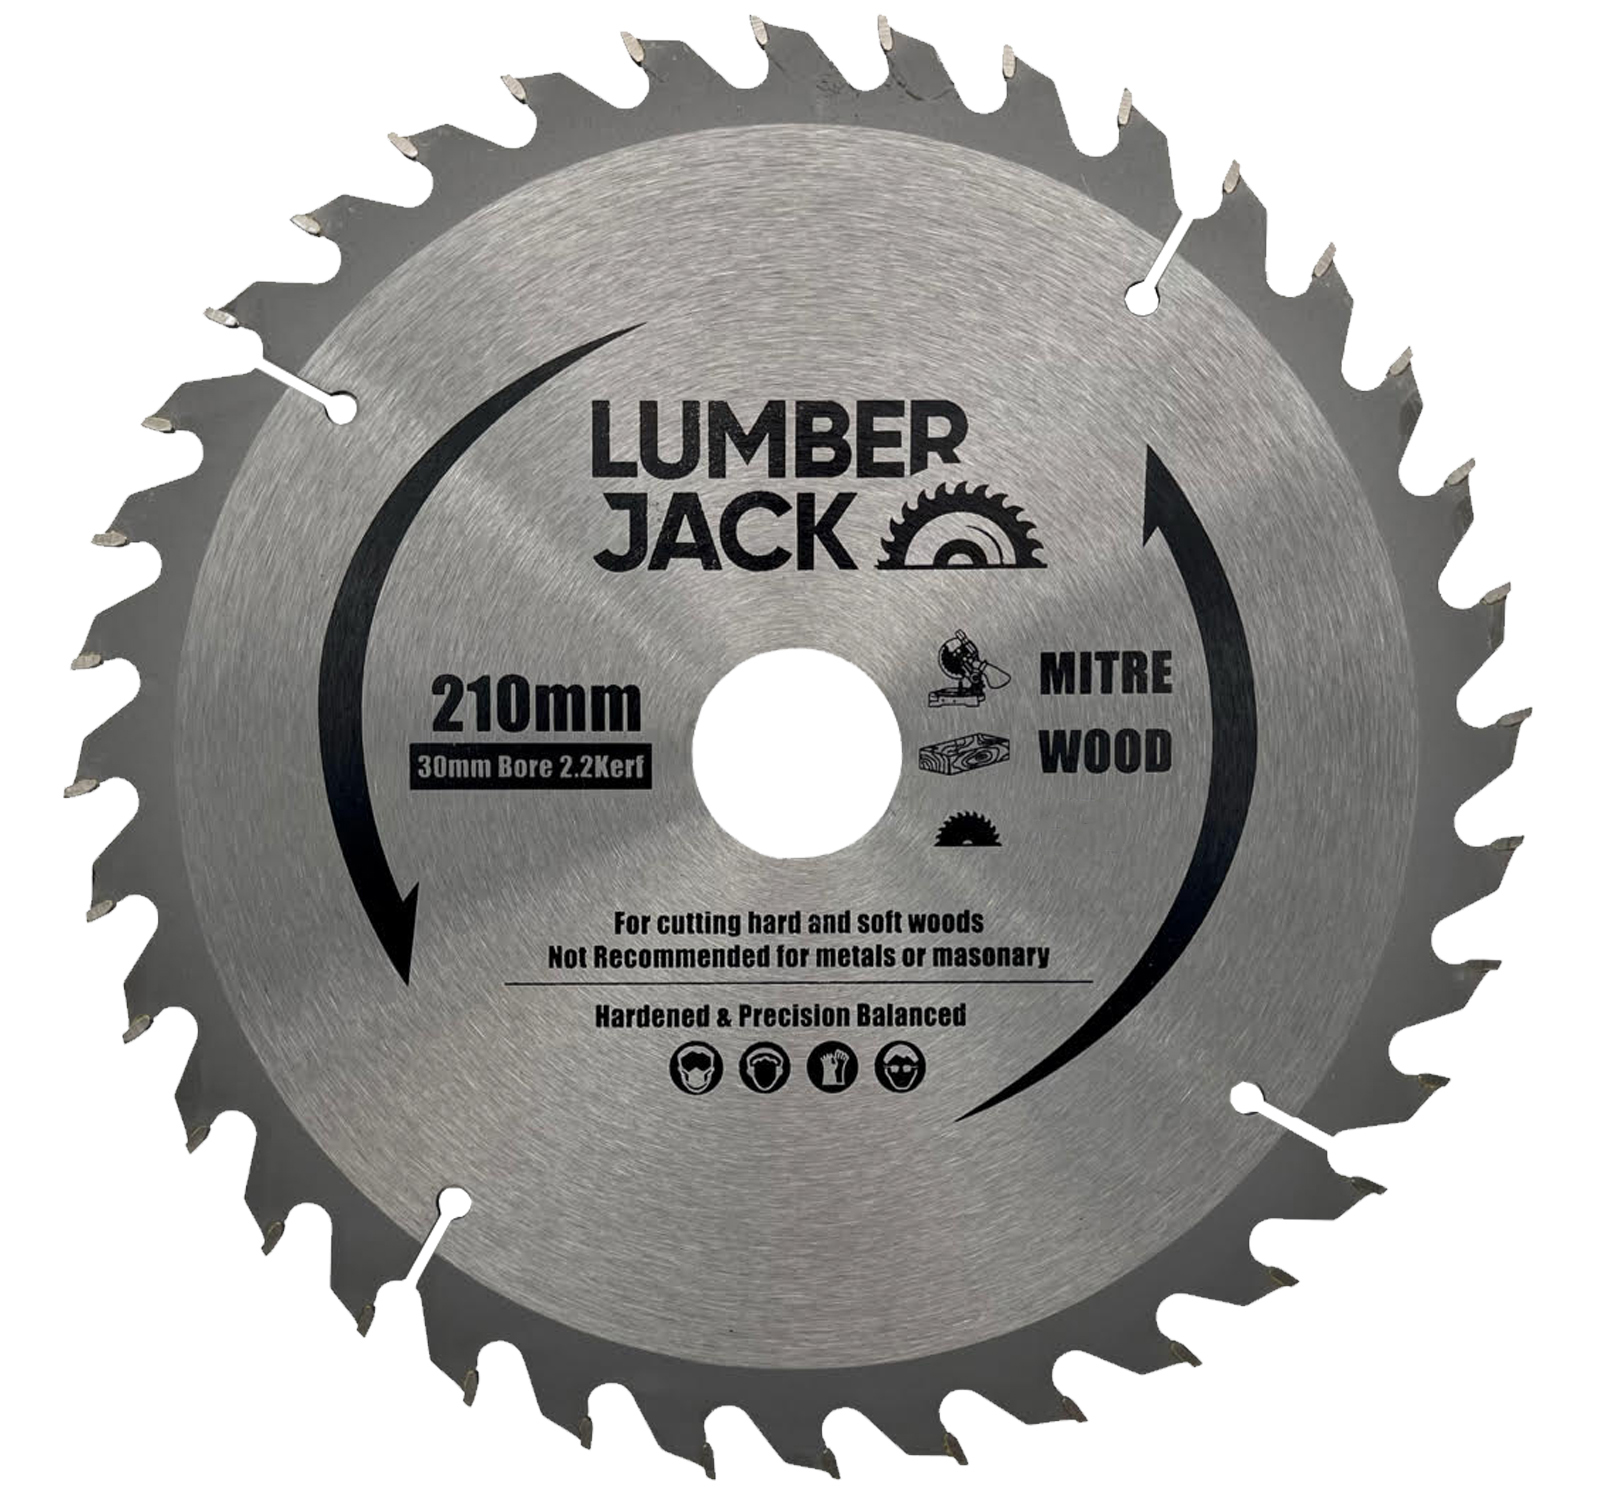 Lumberjack 210mm 48 Tooth Circular Saw Blade 30mm bore